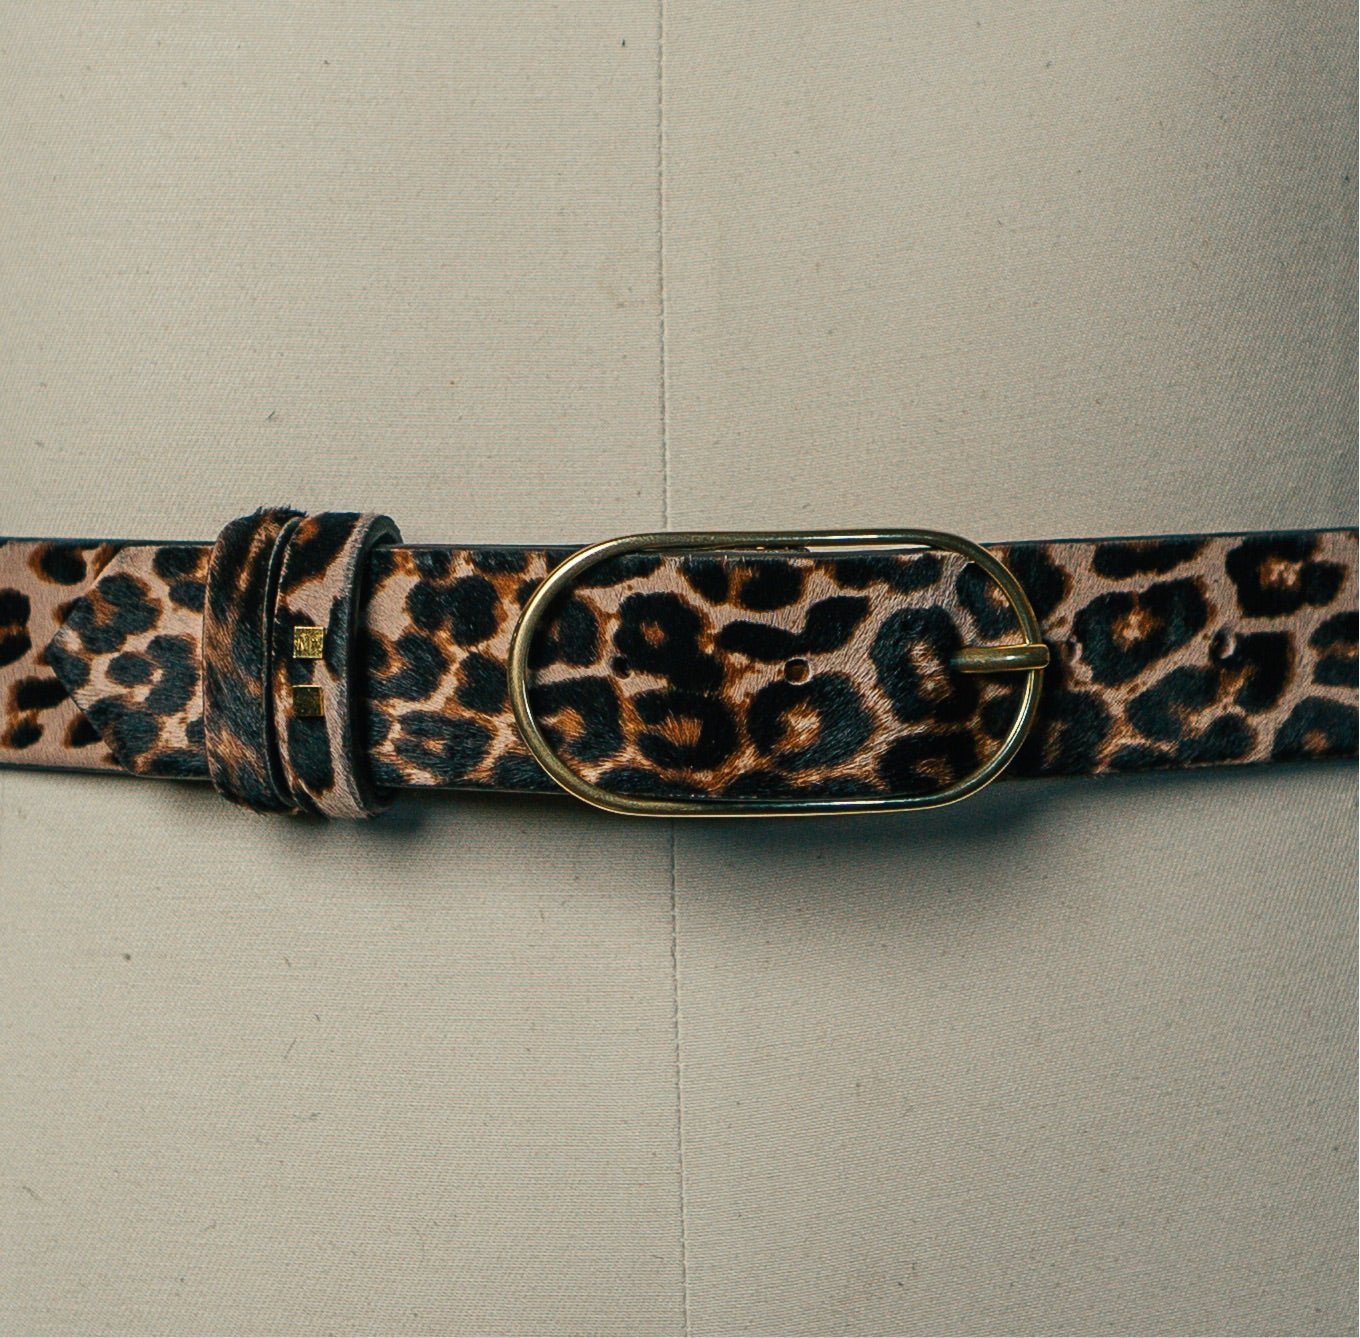 The Woodmont Belt: Cheetah Print Hair Calf